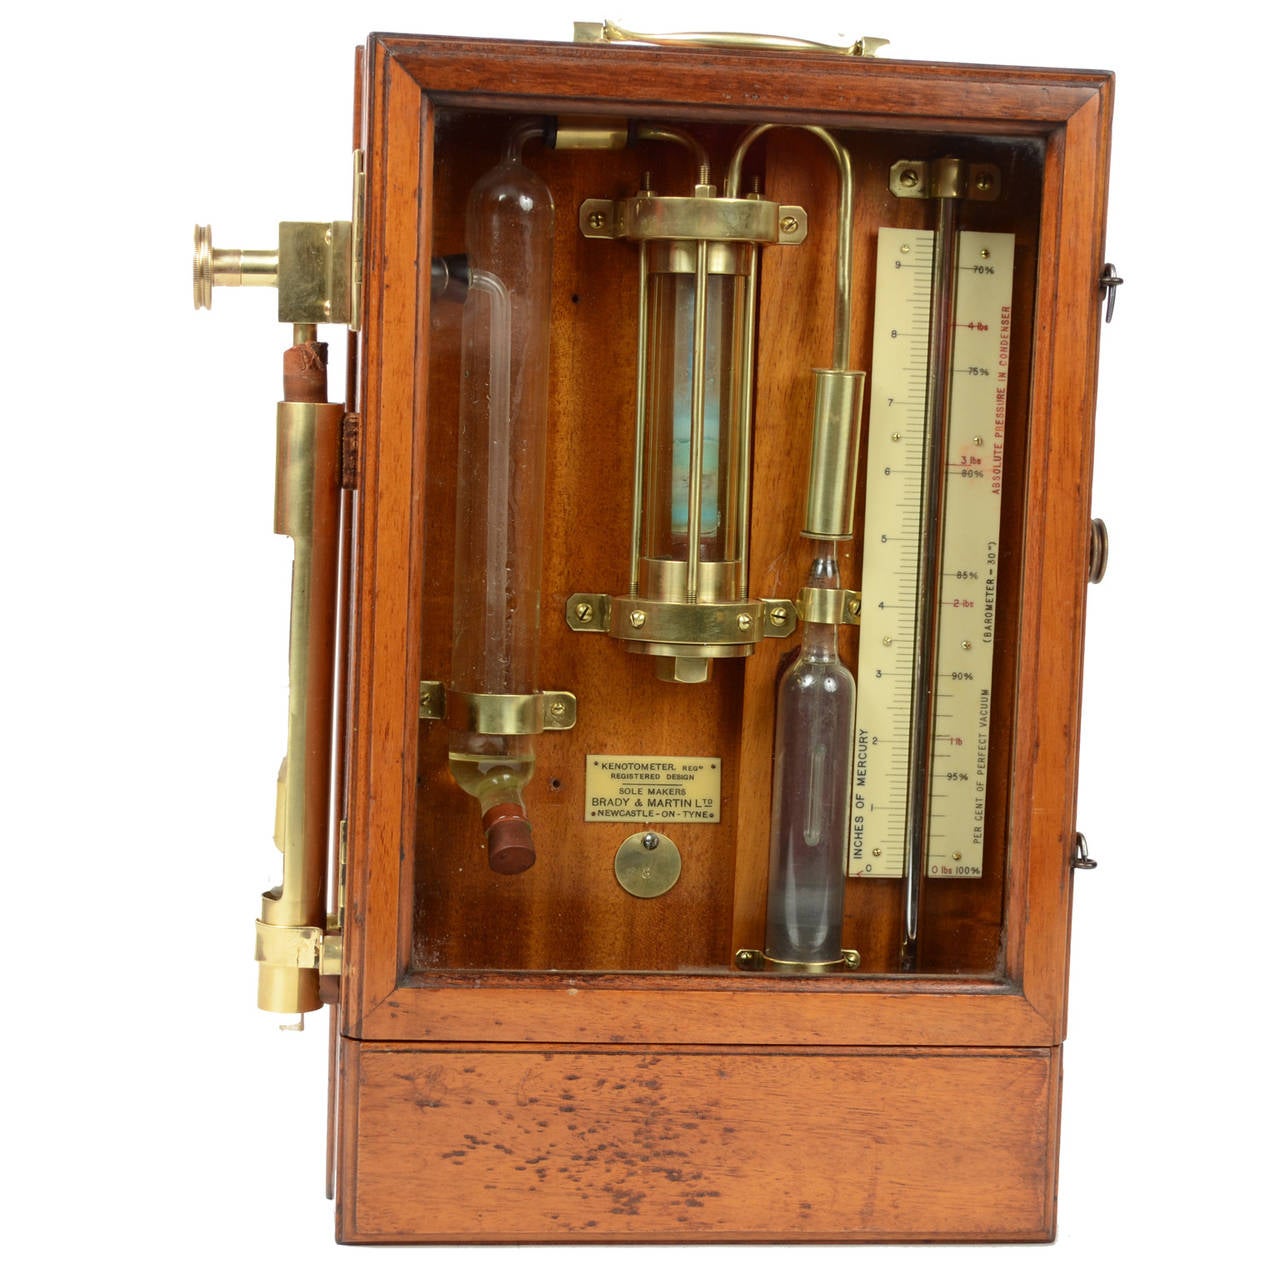 20th Century Kenotometer Signed Brady & Martin Ltd Newcastle-on-Tyne, Early 1900